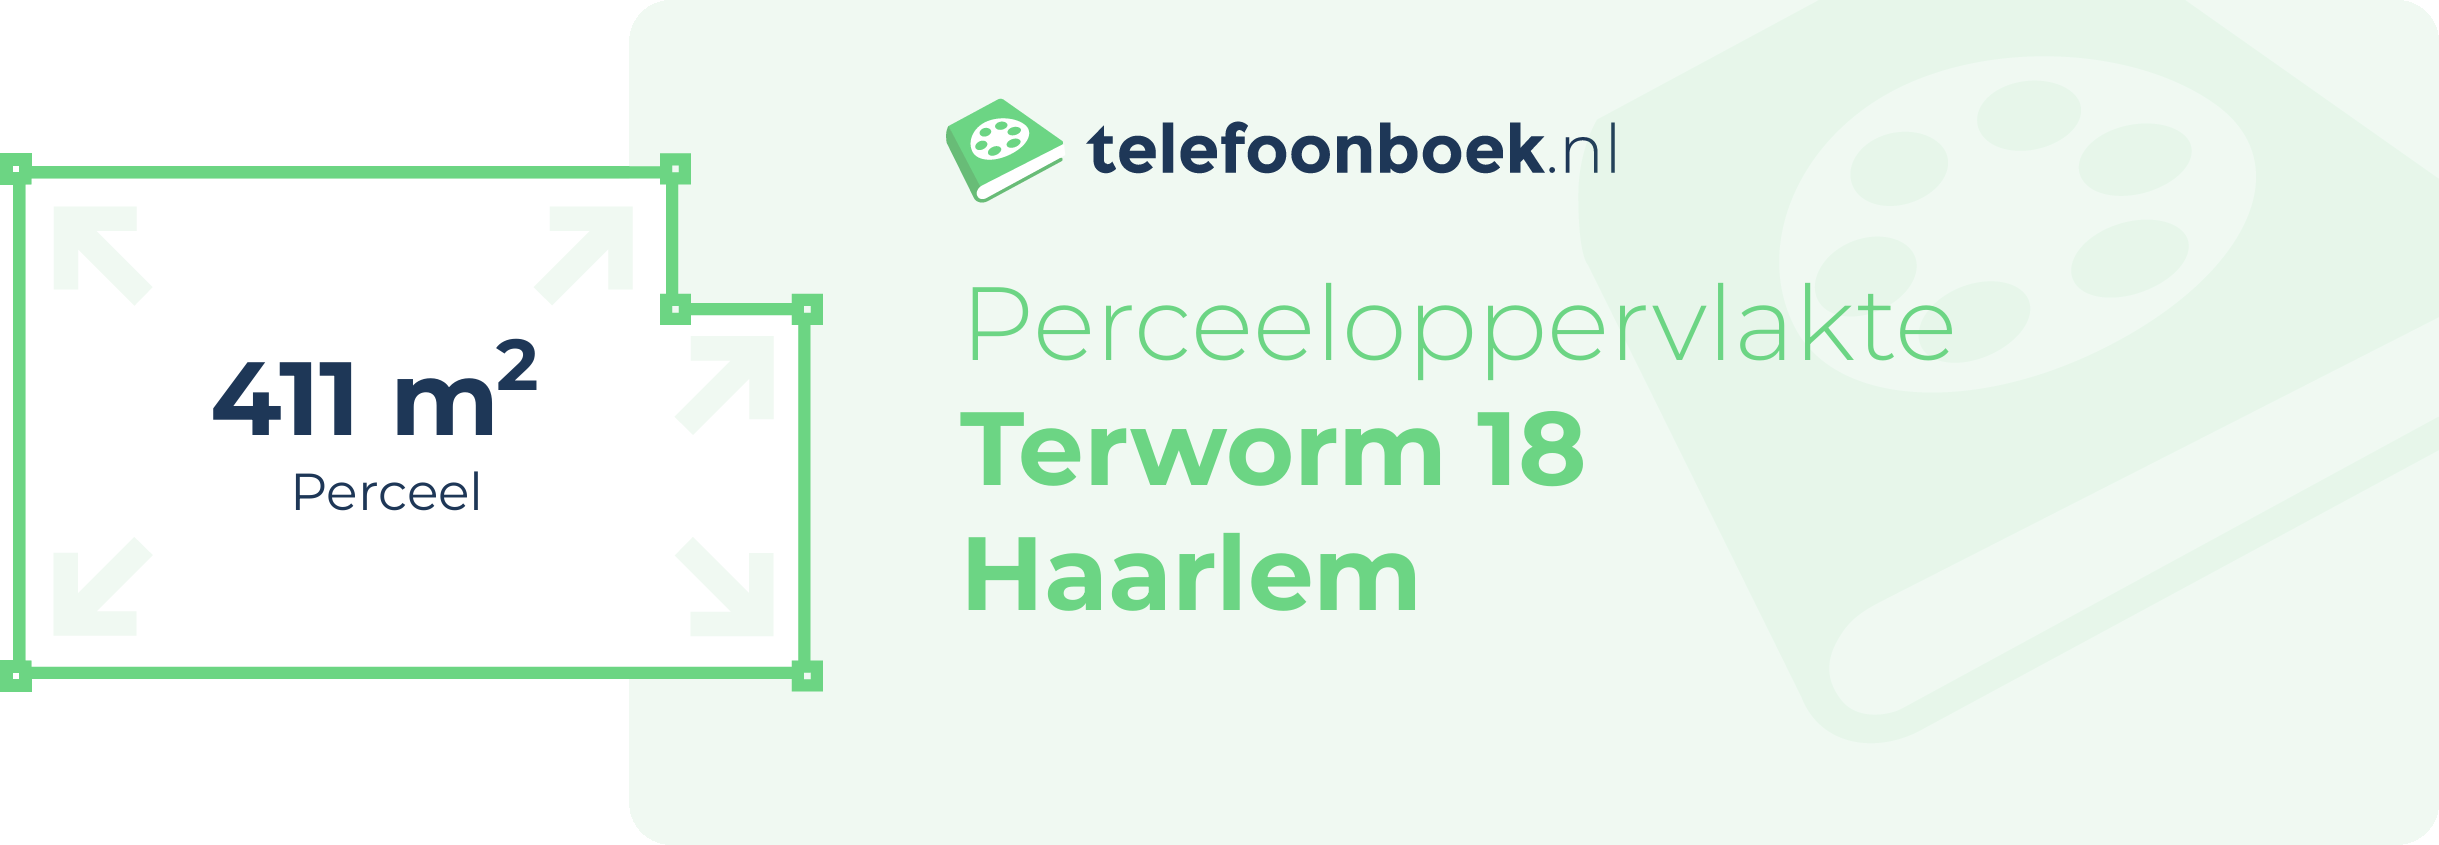 Perceeloppervlakte Terworm 18 Haarlem